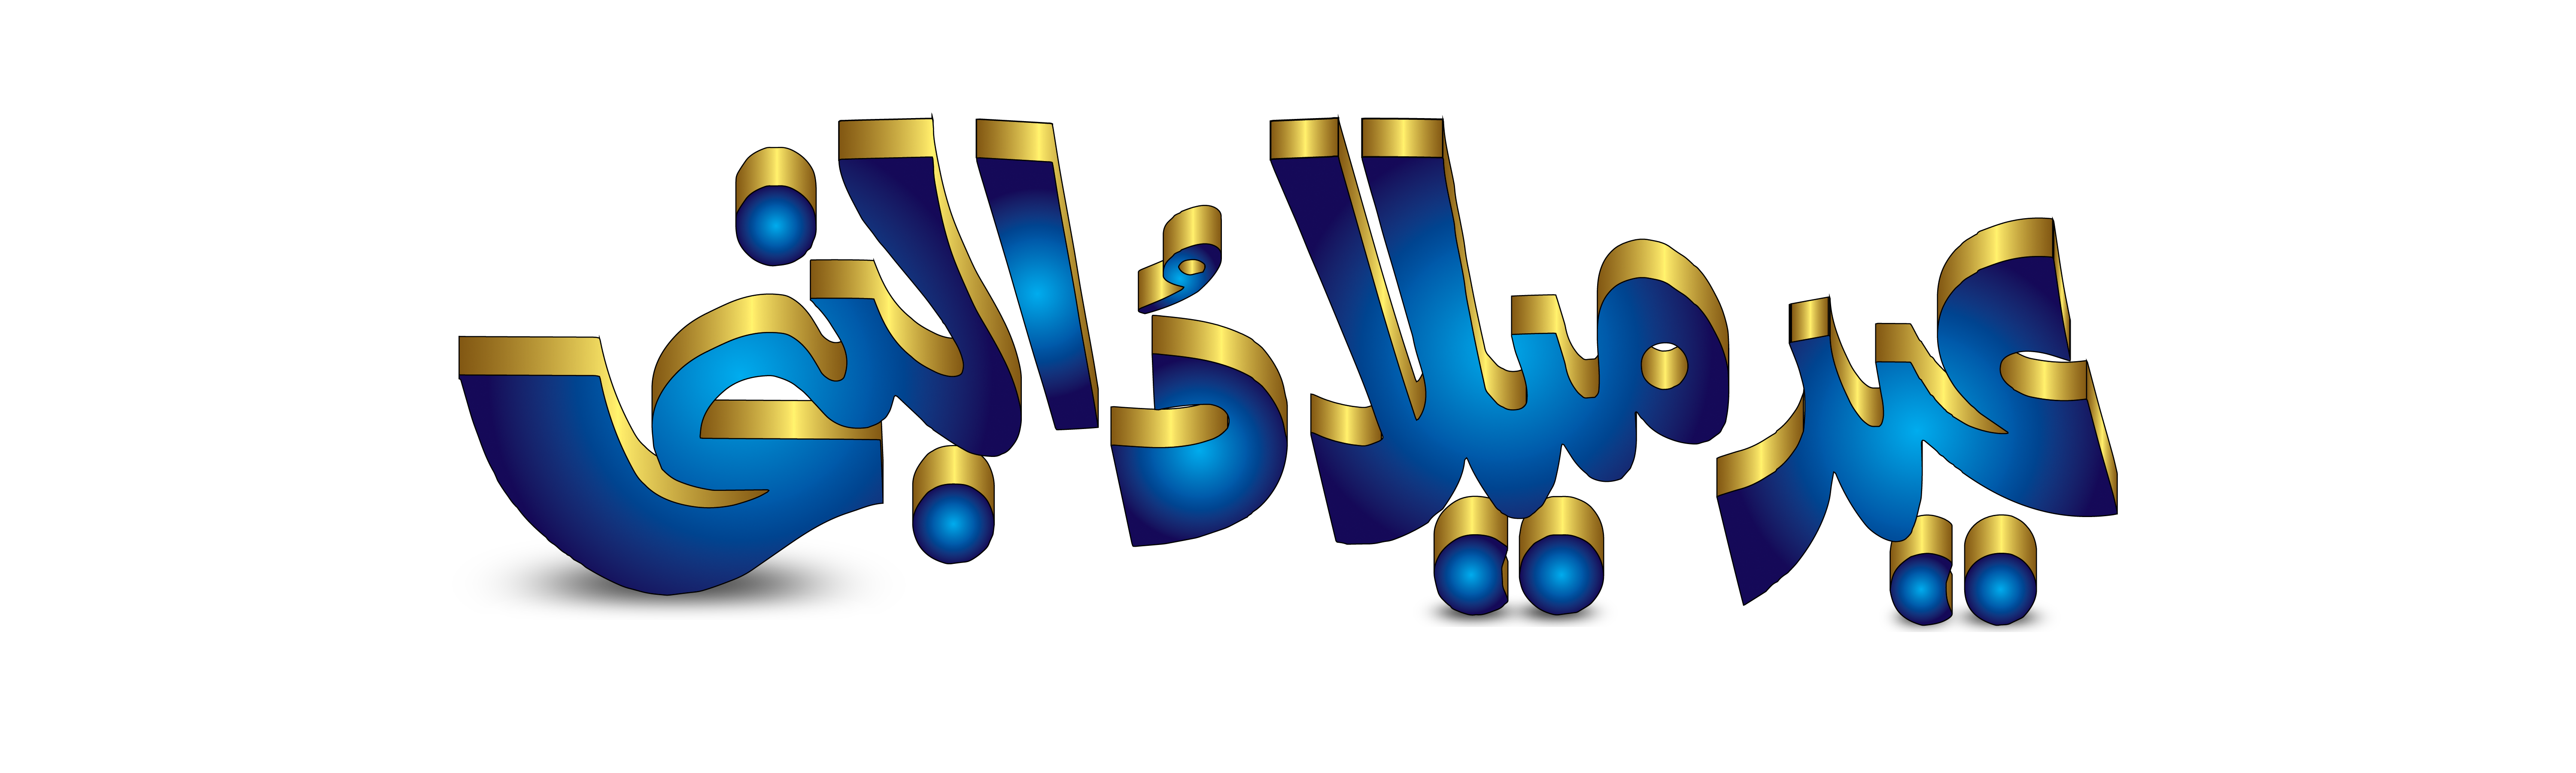 How to download stylish fonts; Pashto Stylish Fonts